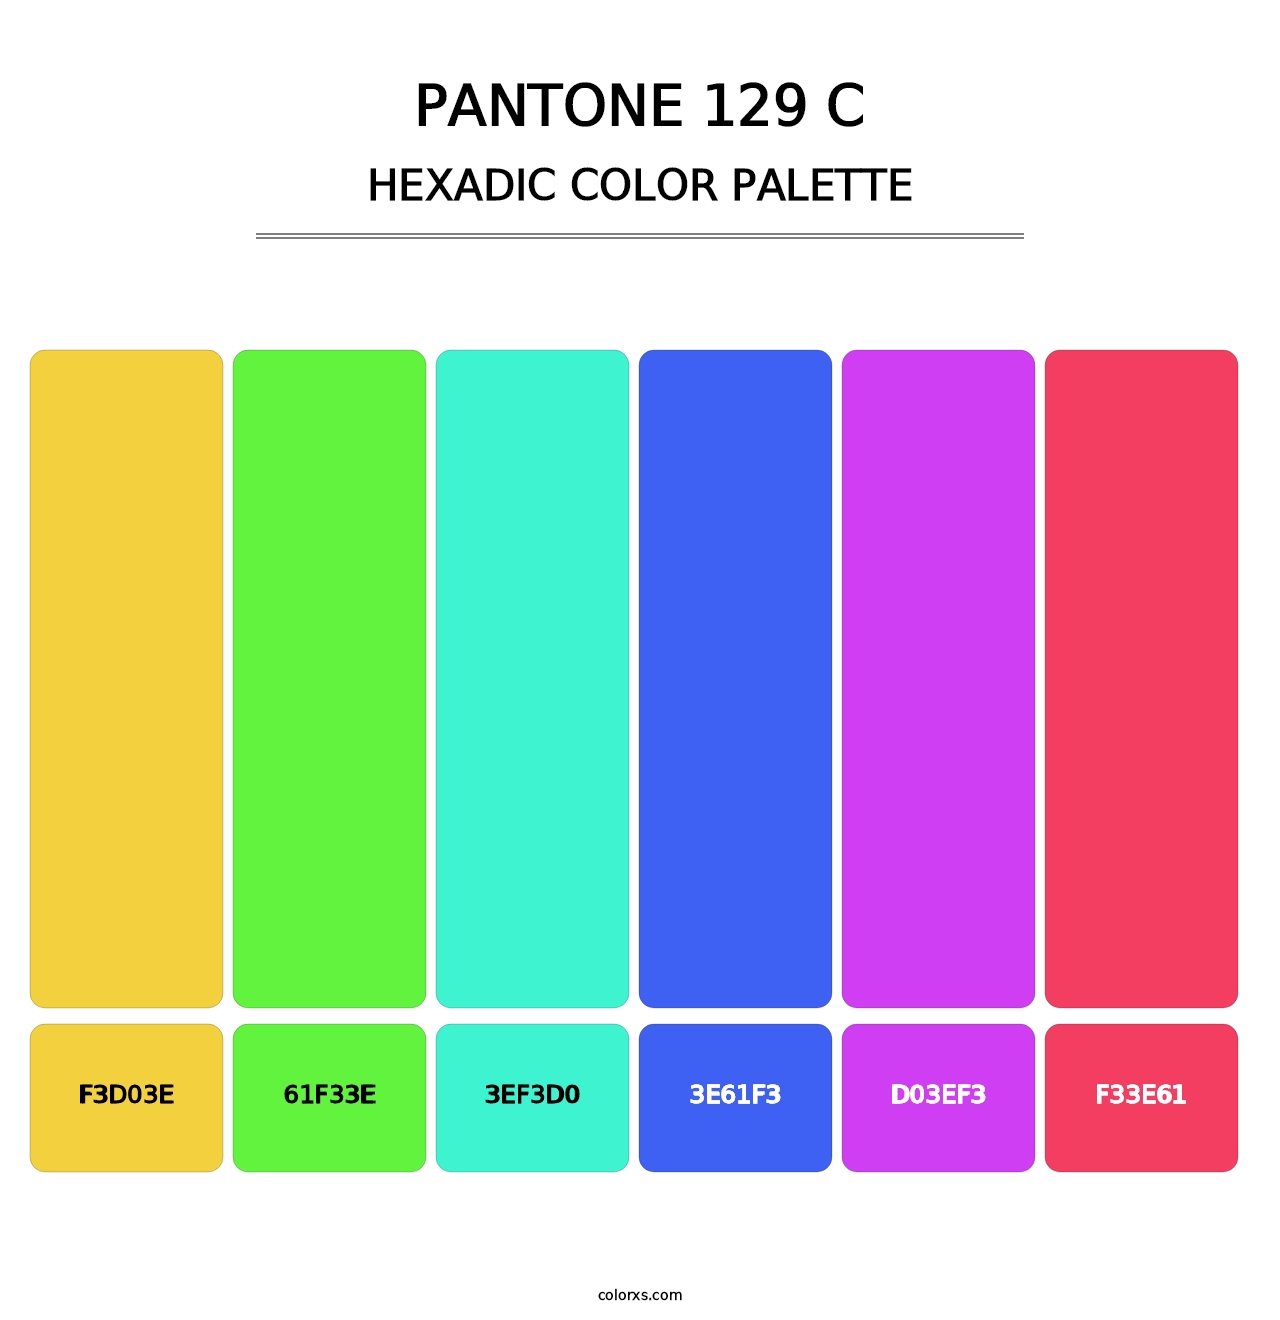 PANTONE 129 C - Hexadic Color Palette